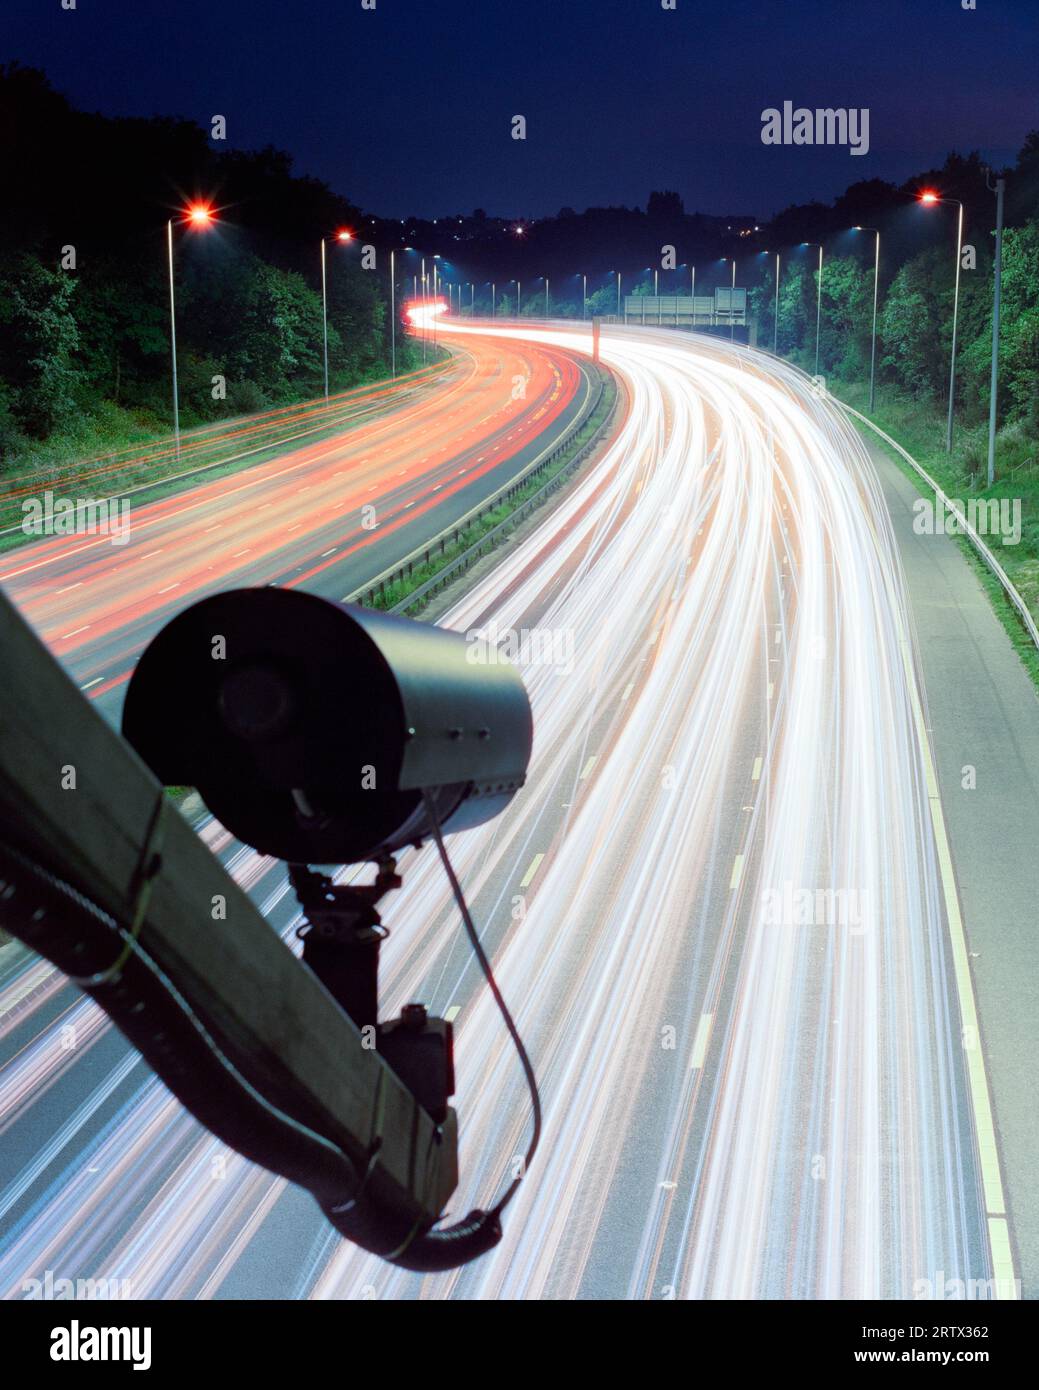 ANPR motorway camera. 'Surveillance state' - camera above lanes of traffic, long exposure at night, UK motorway. Theme, concepts. Copy space. Stock Photo